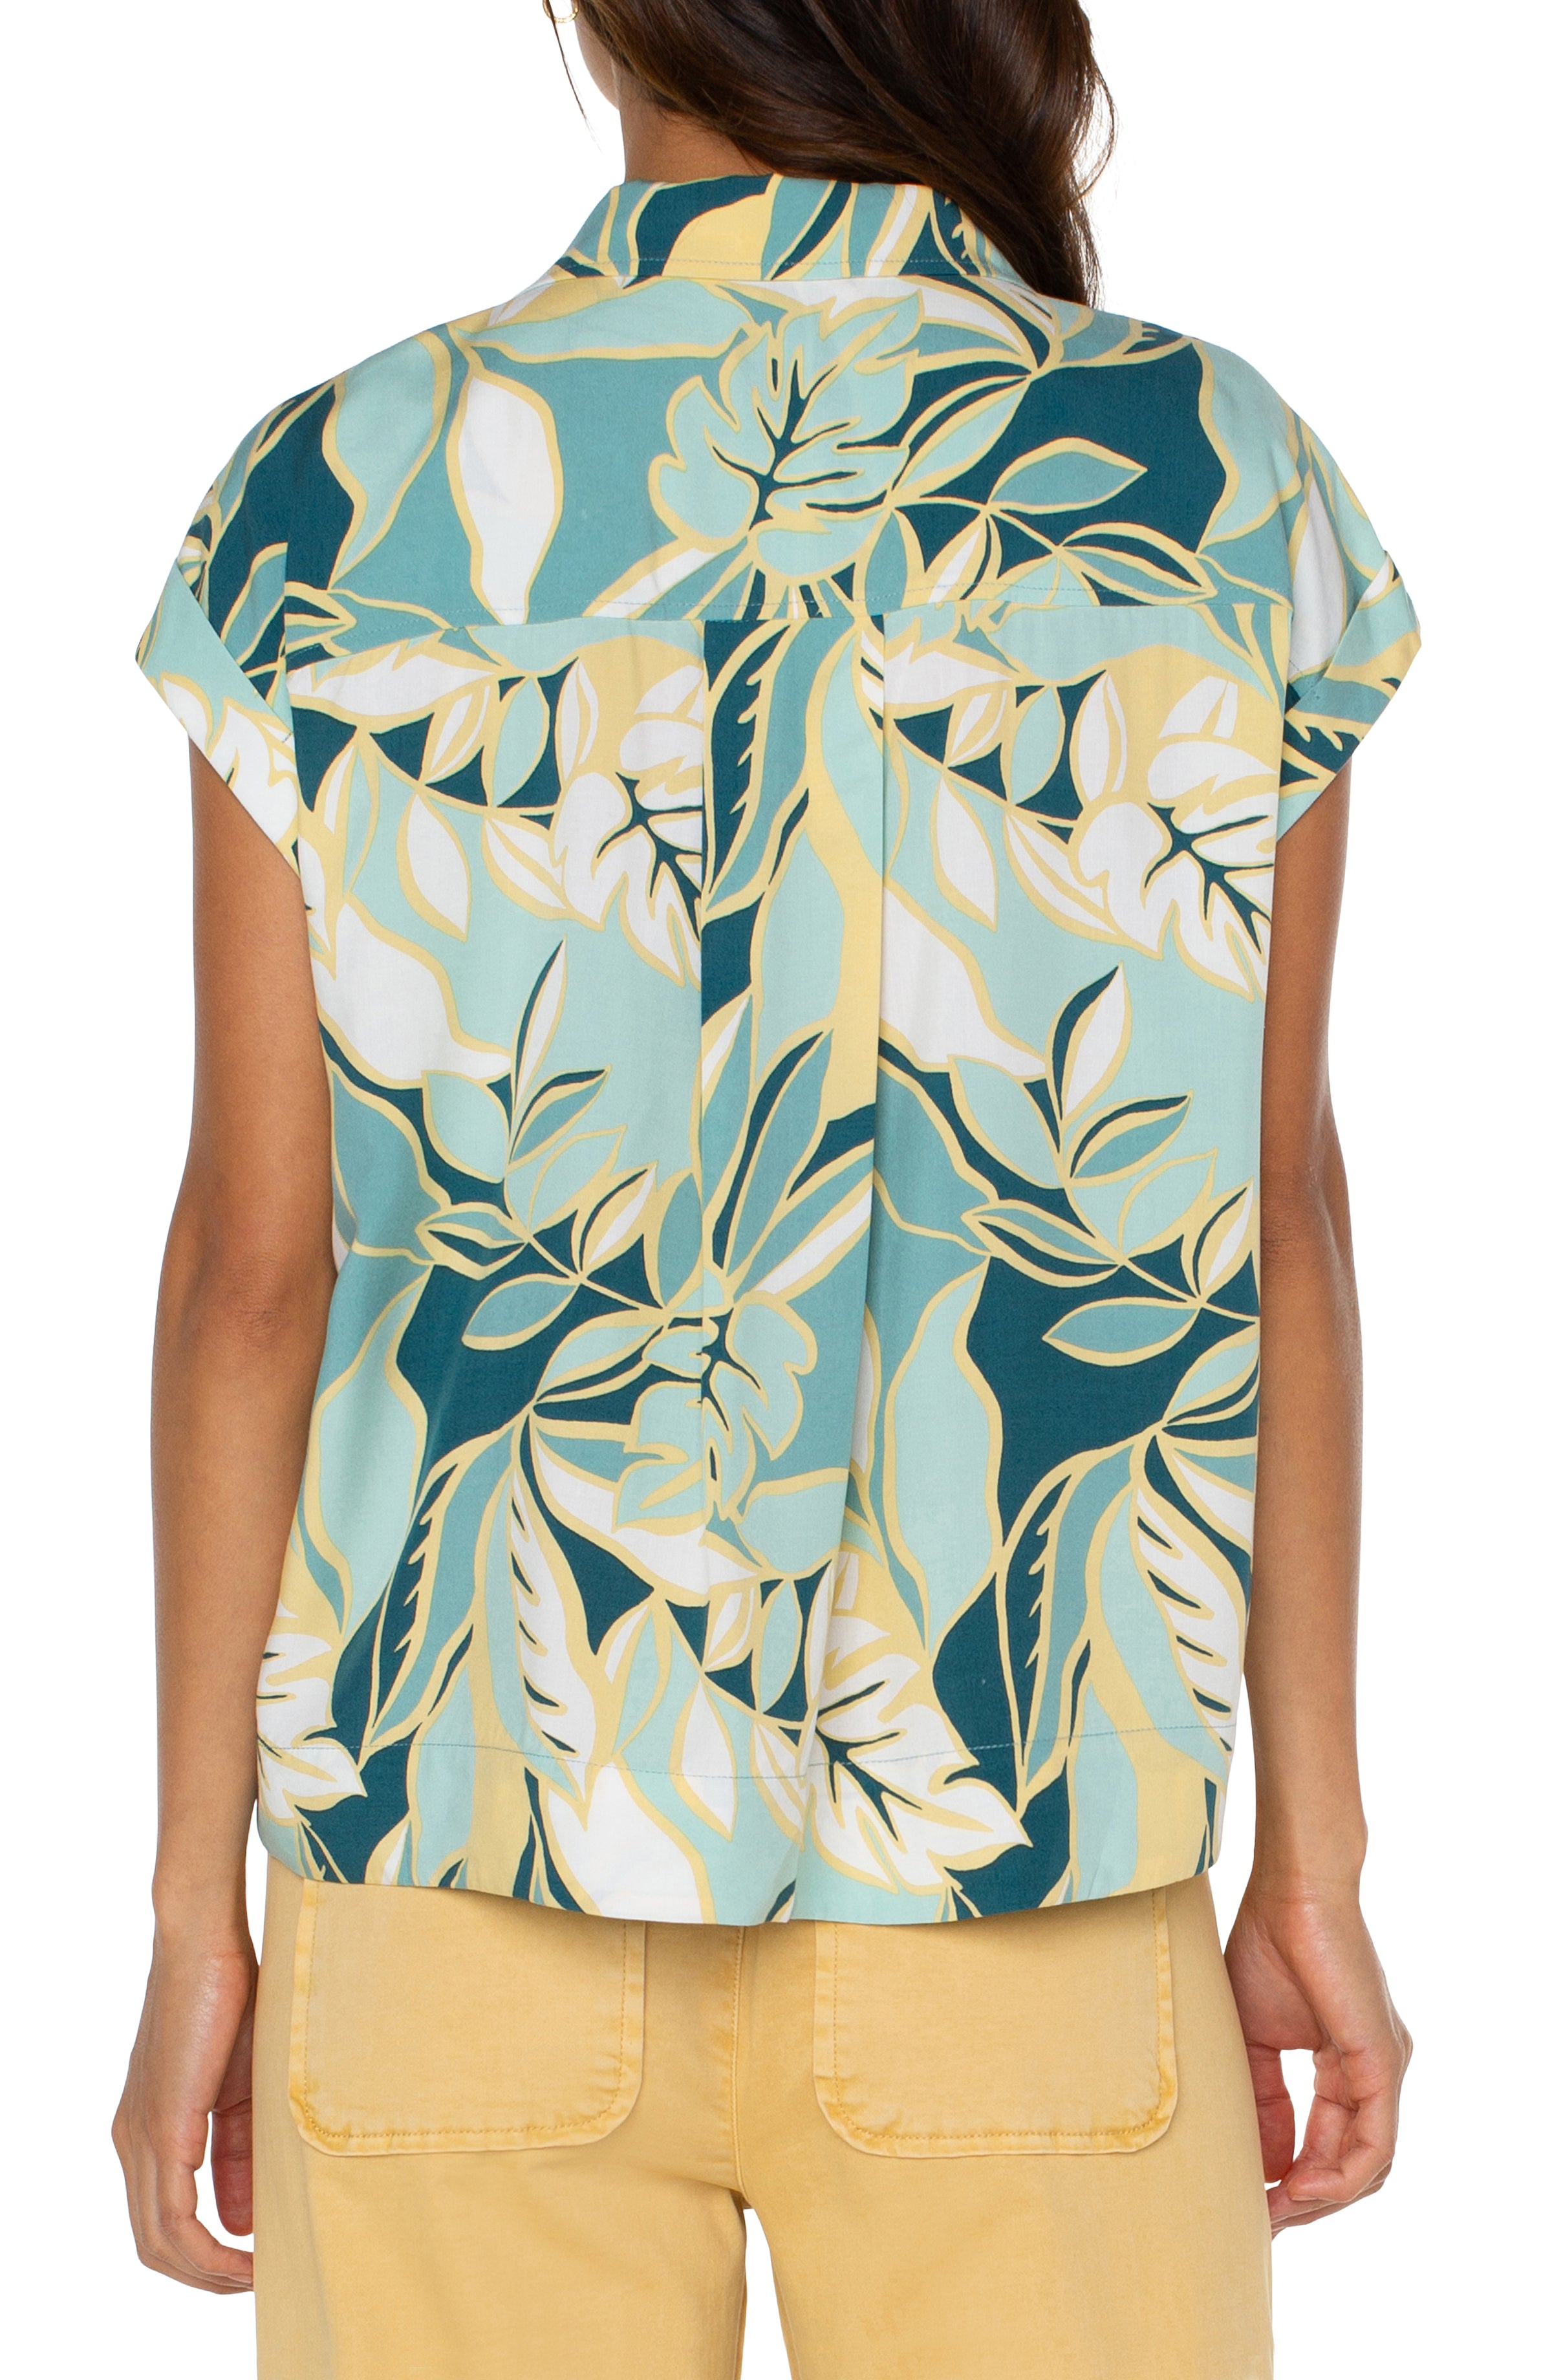 LVP Dolman Camp Shirt - Tropical Floral  Back View